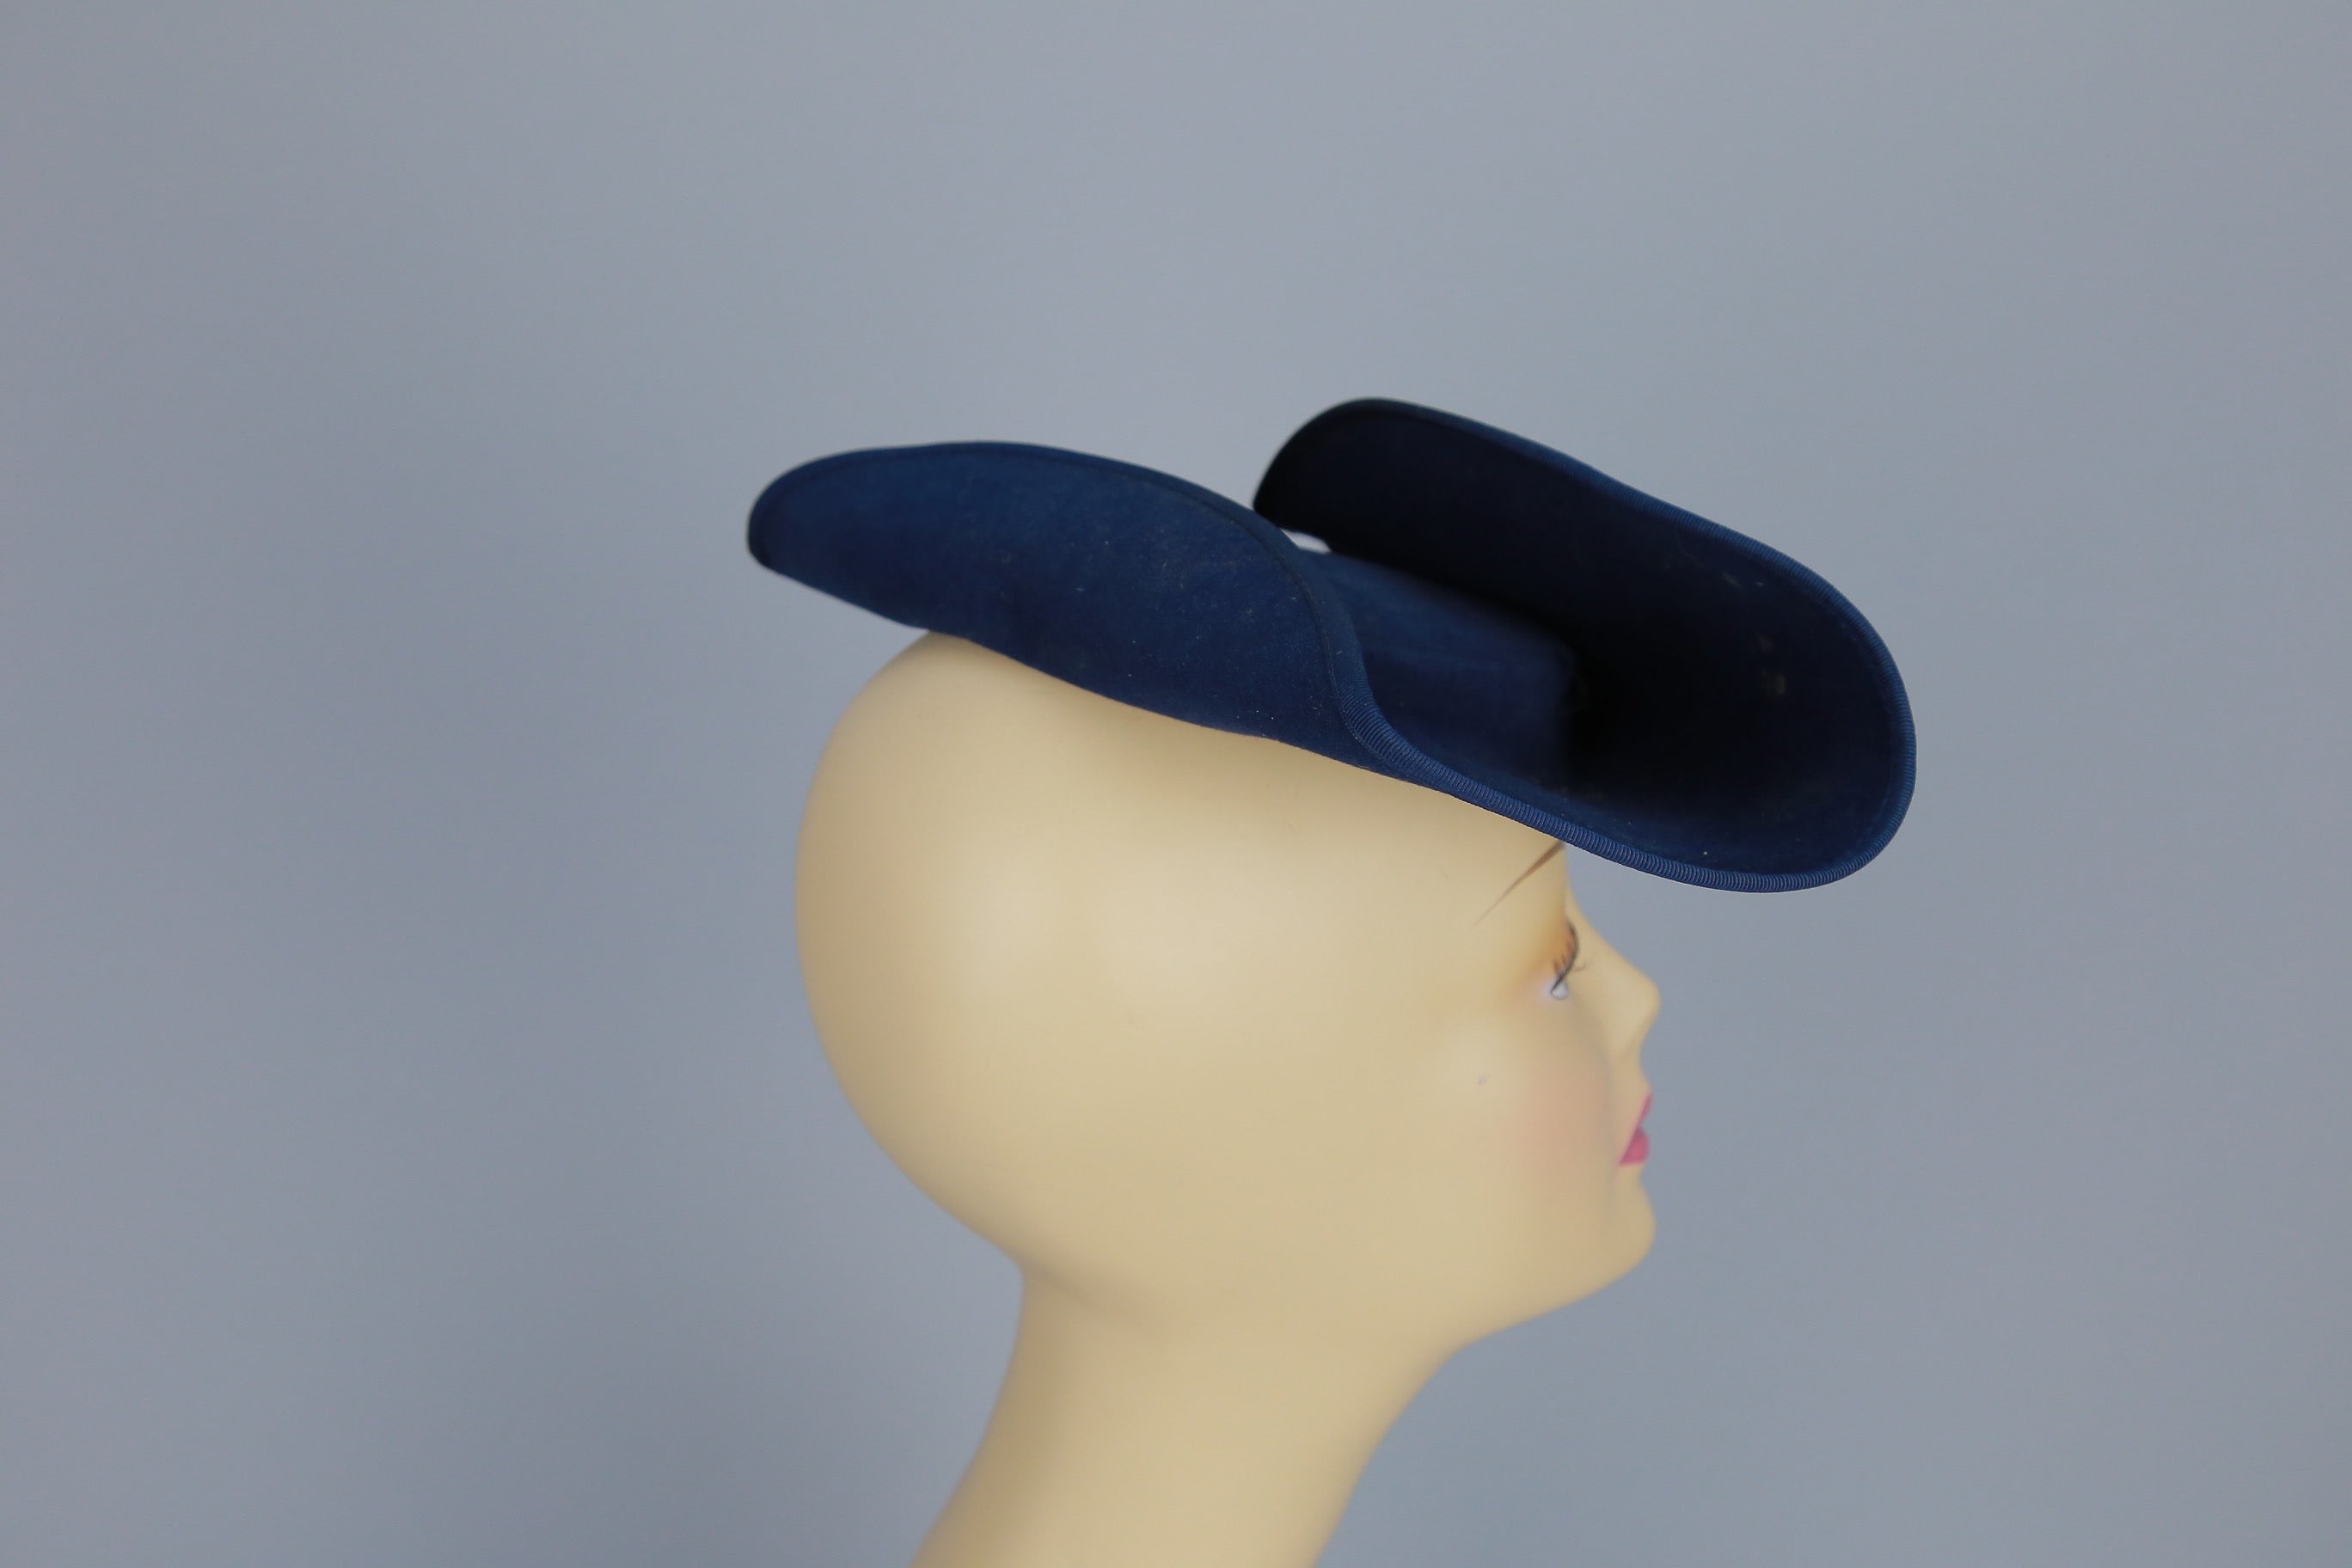 Vintage Edwardian hat wide brim metallic trim